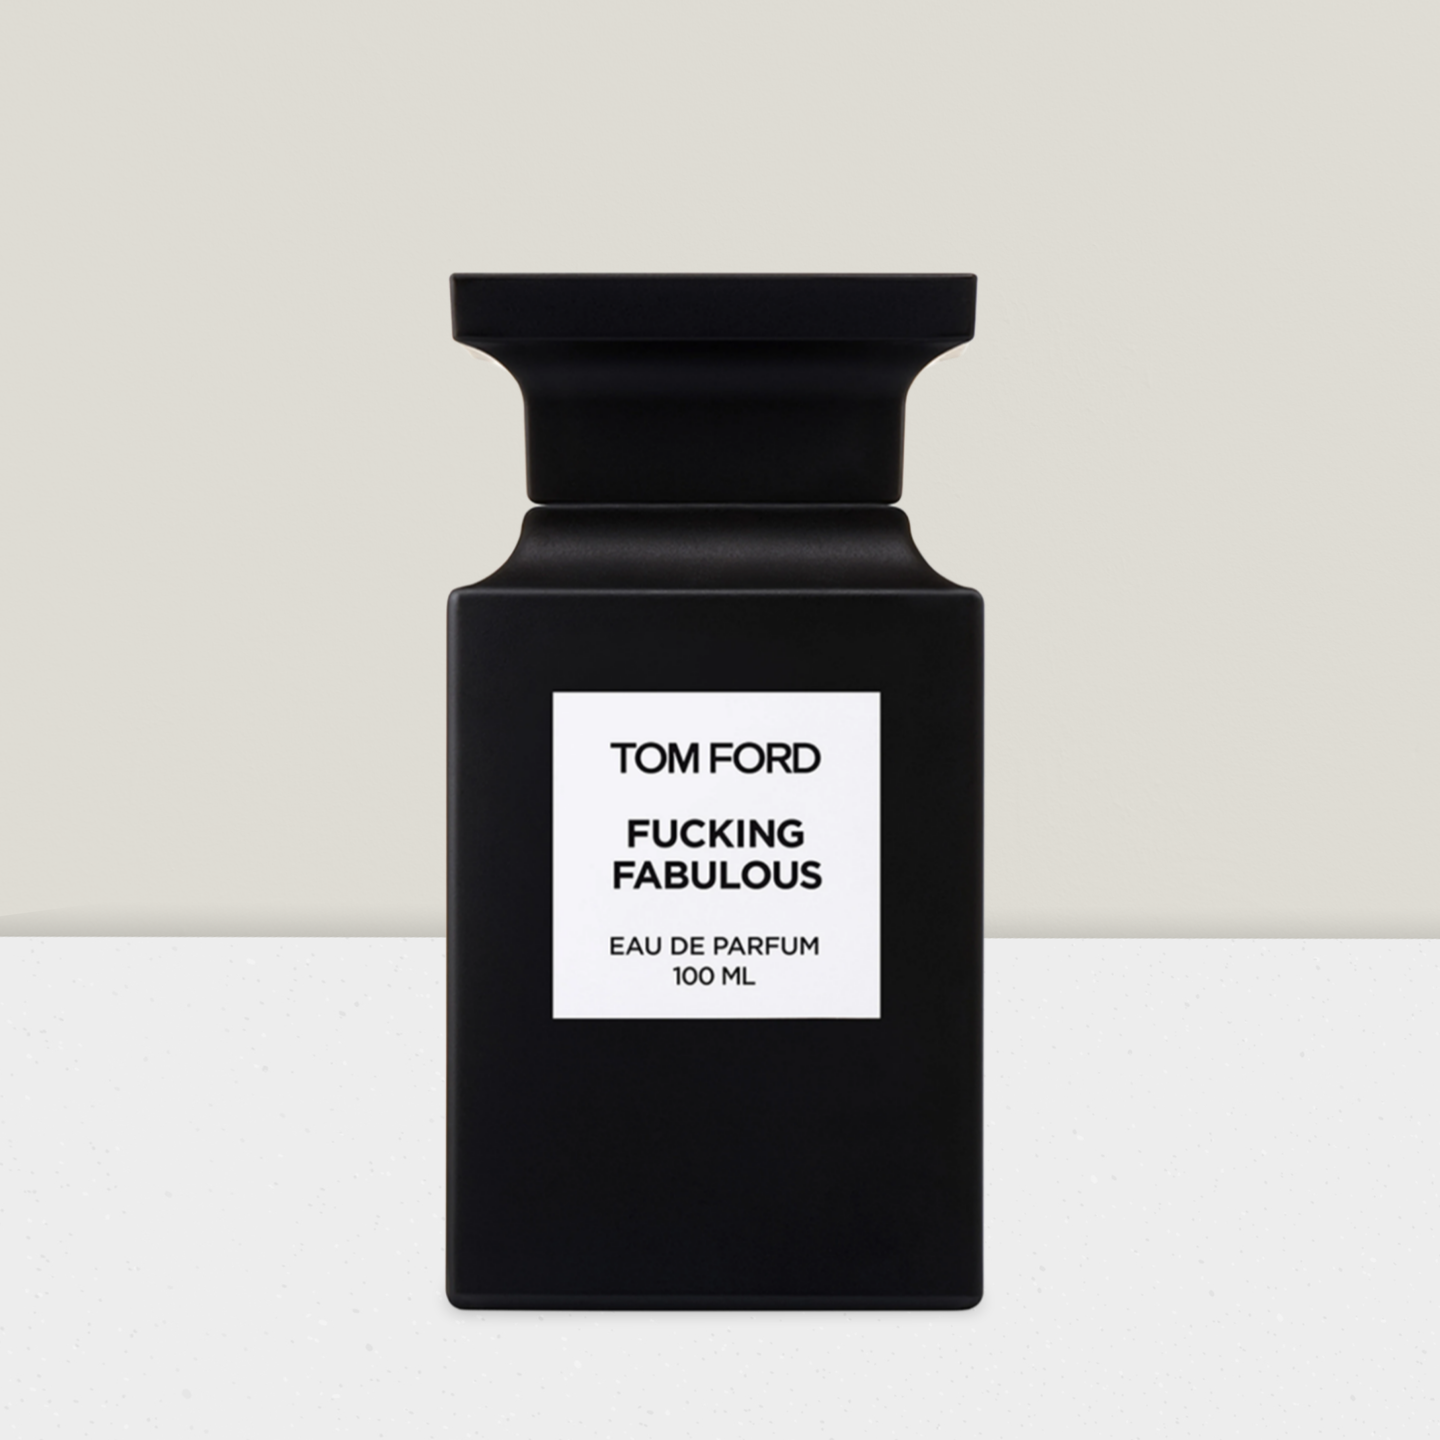 TOM FORD - Fucking Fabulous Duftprobe Parfümprobe Abfüllung